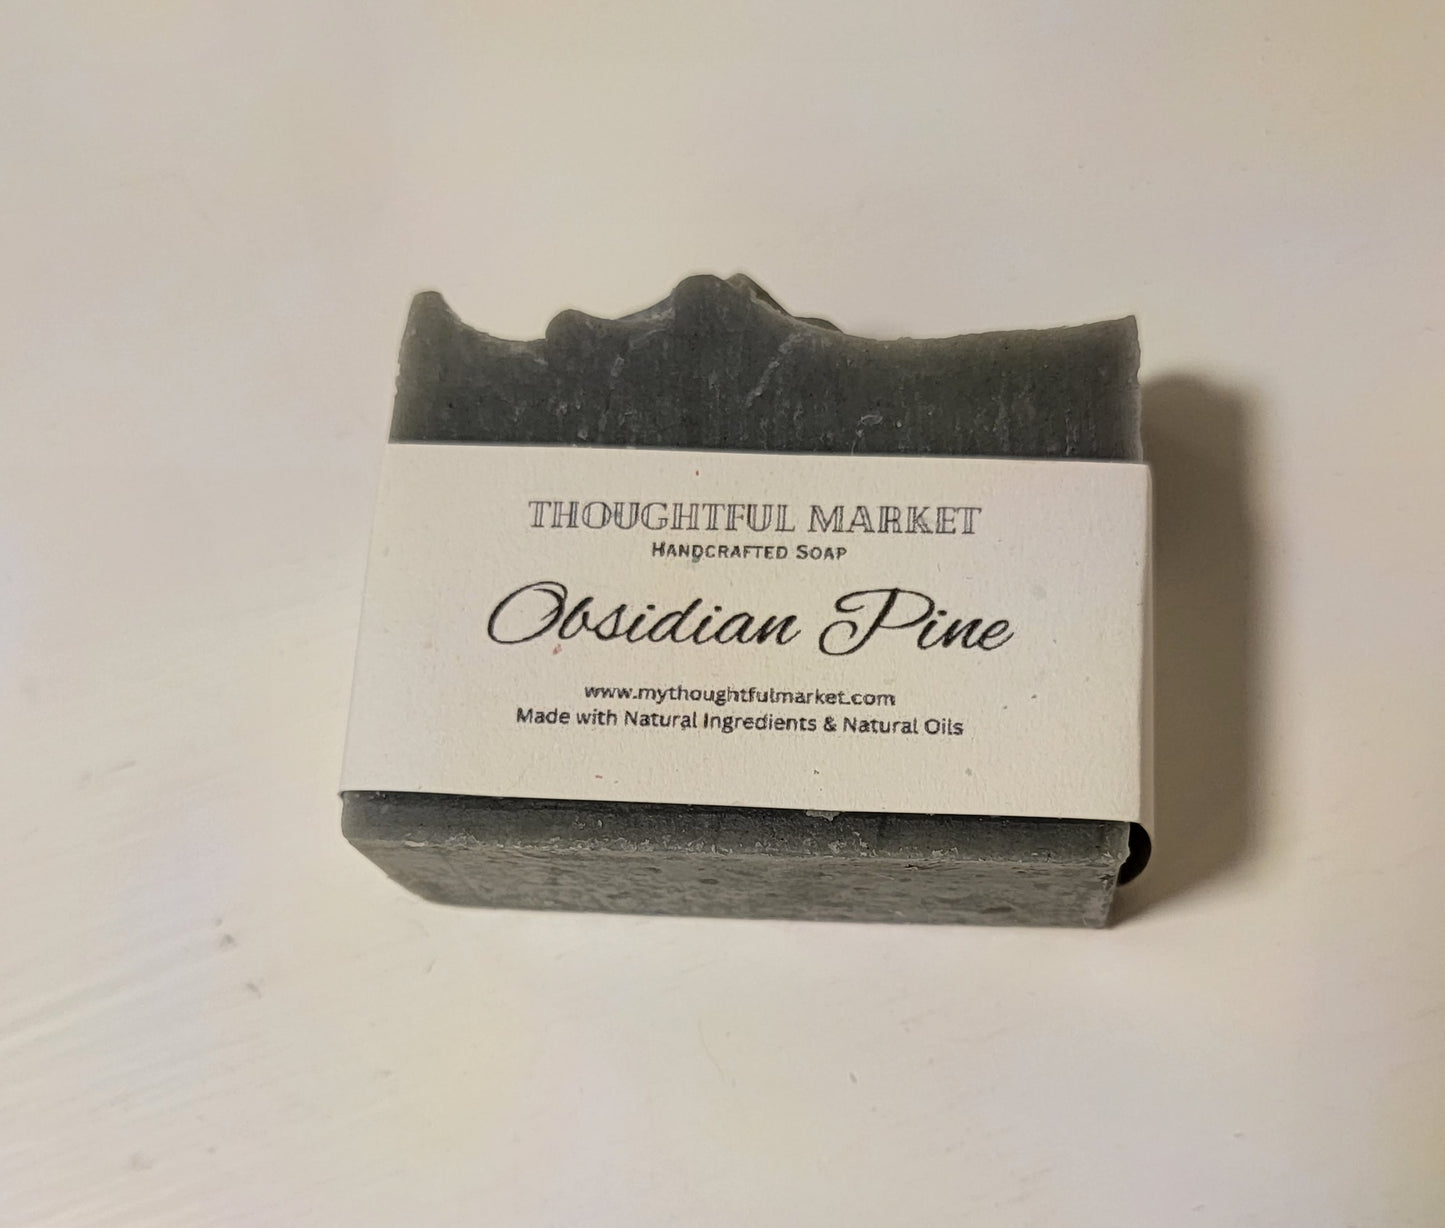 Obsidian Pine Bar Soap